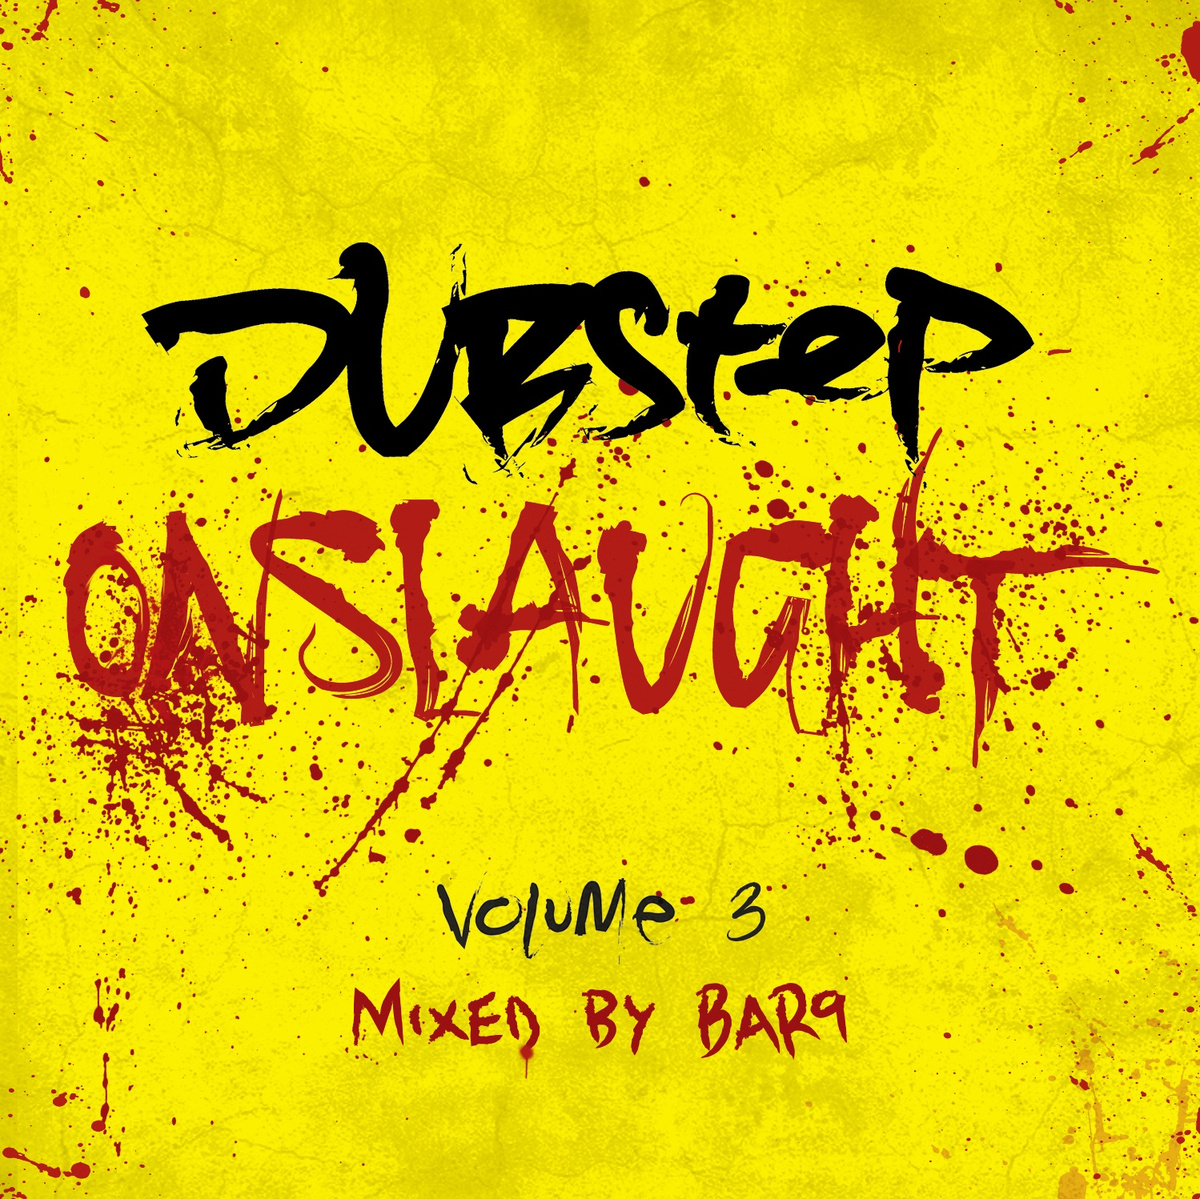 Dubstep Onslaught Vol.3: Mixed by BAR9